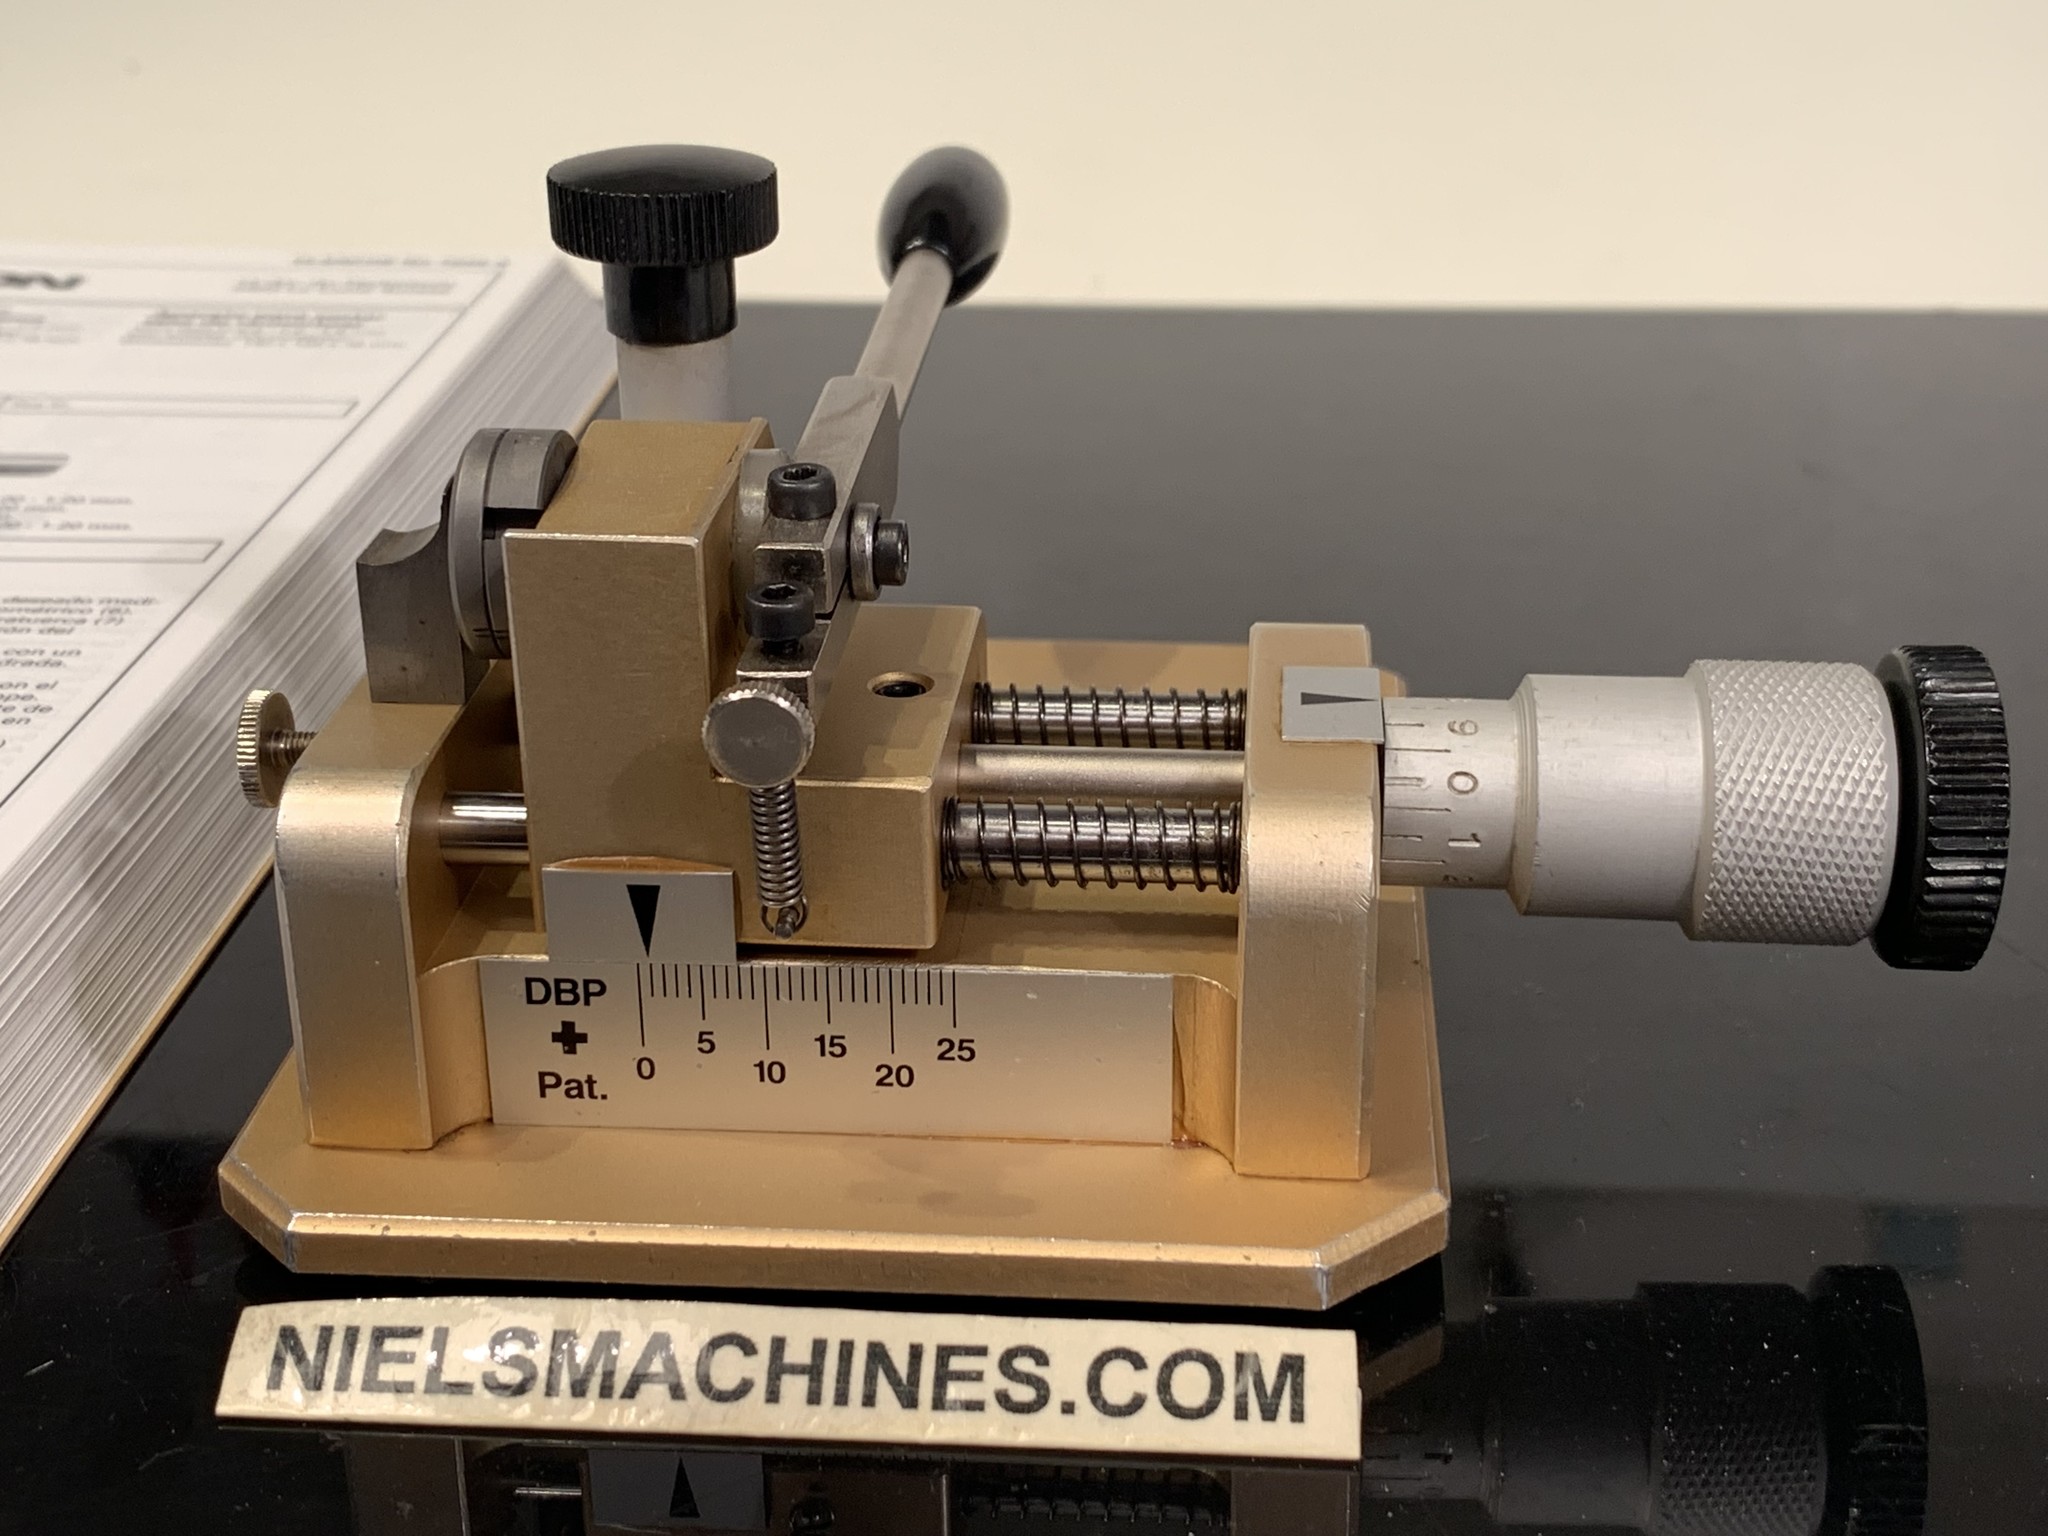 Bergeon 5832 watchmaker tool for shortening winding stems - Niels